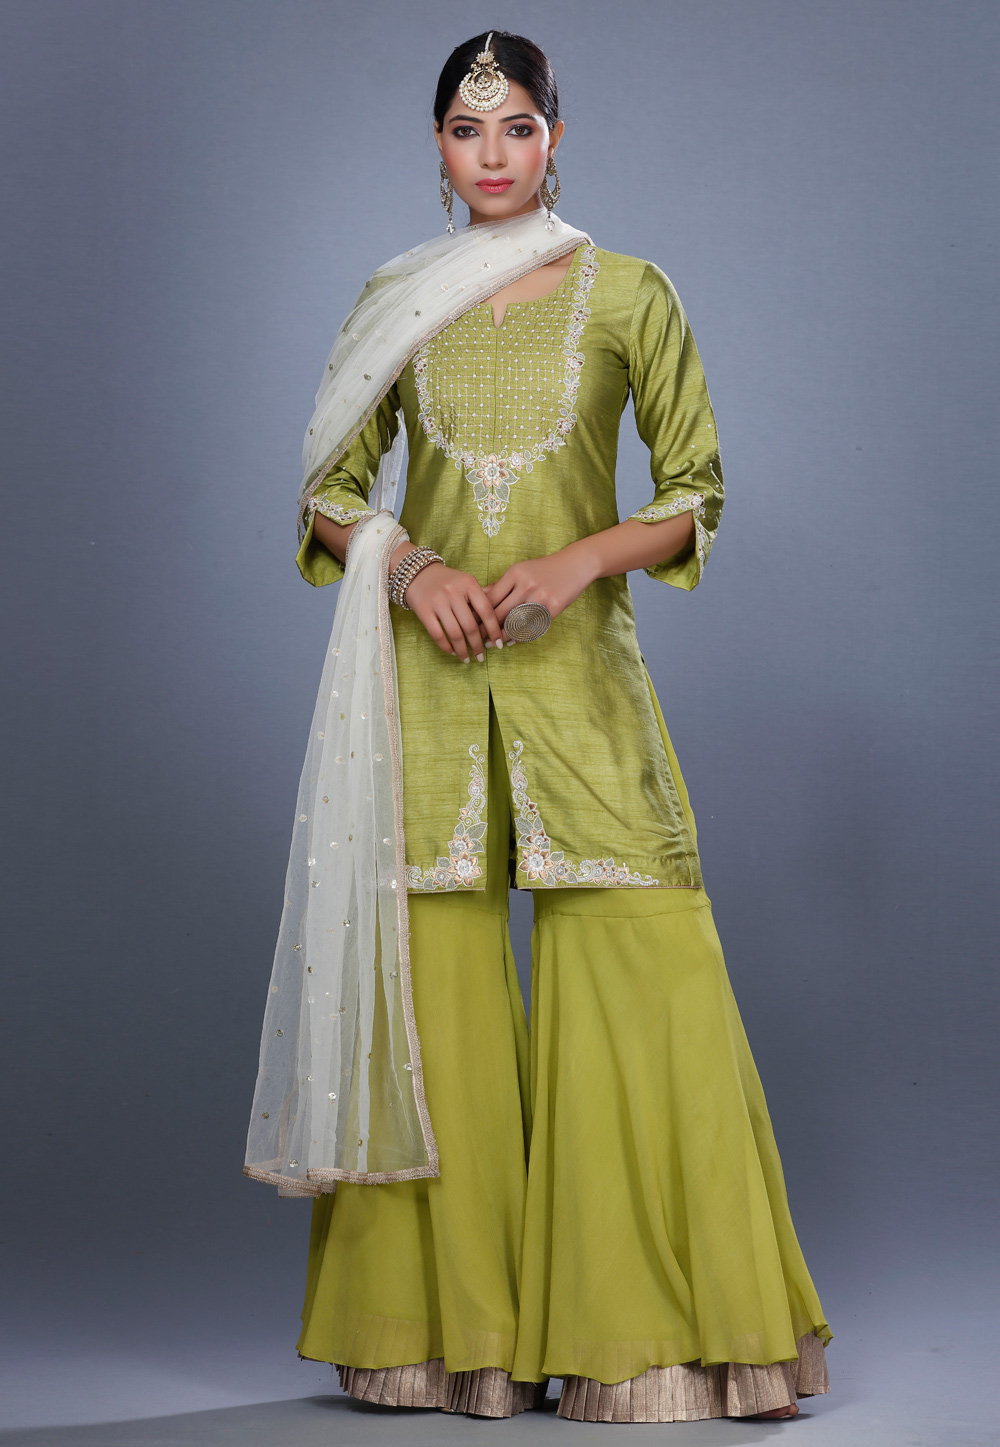 Atasi Women's Designer Anarkali Green Salwar Suit Ethnic Indian Cotton  Dress-14 - Walmart.com